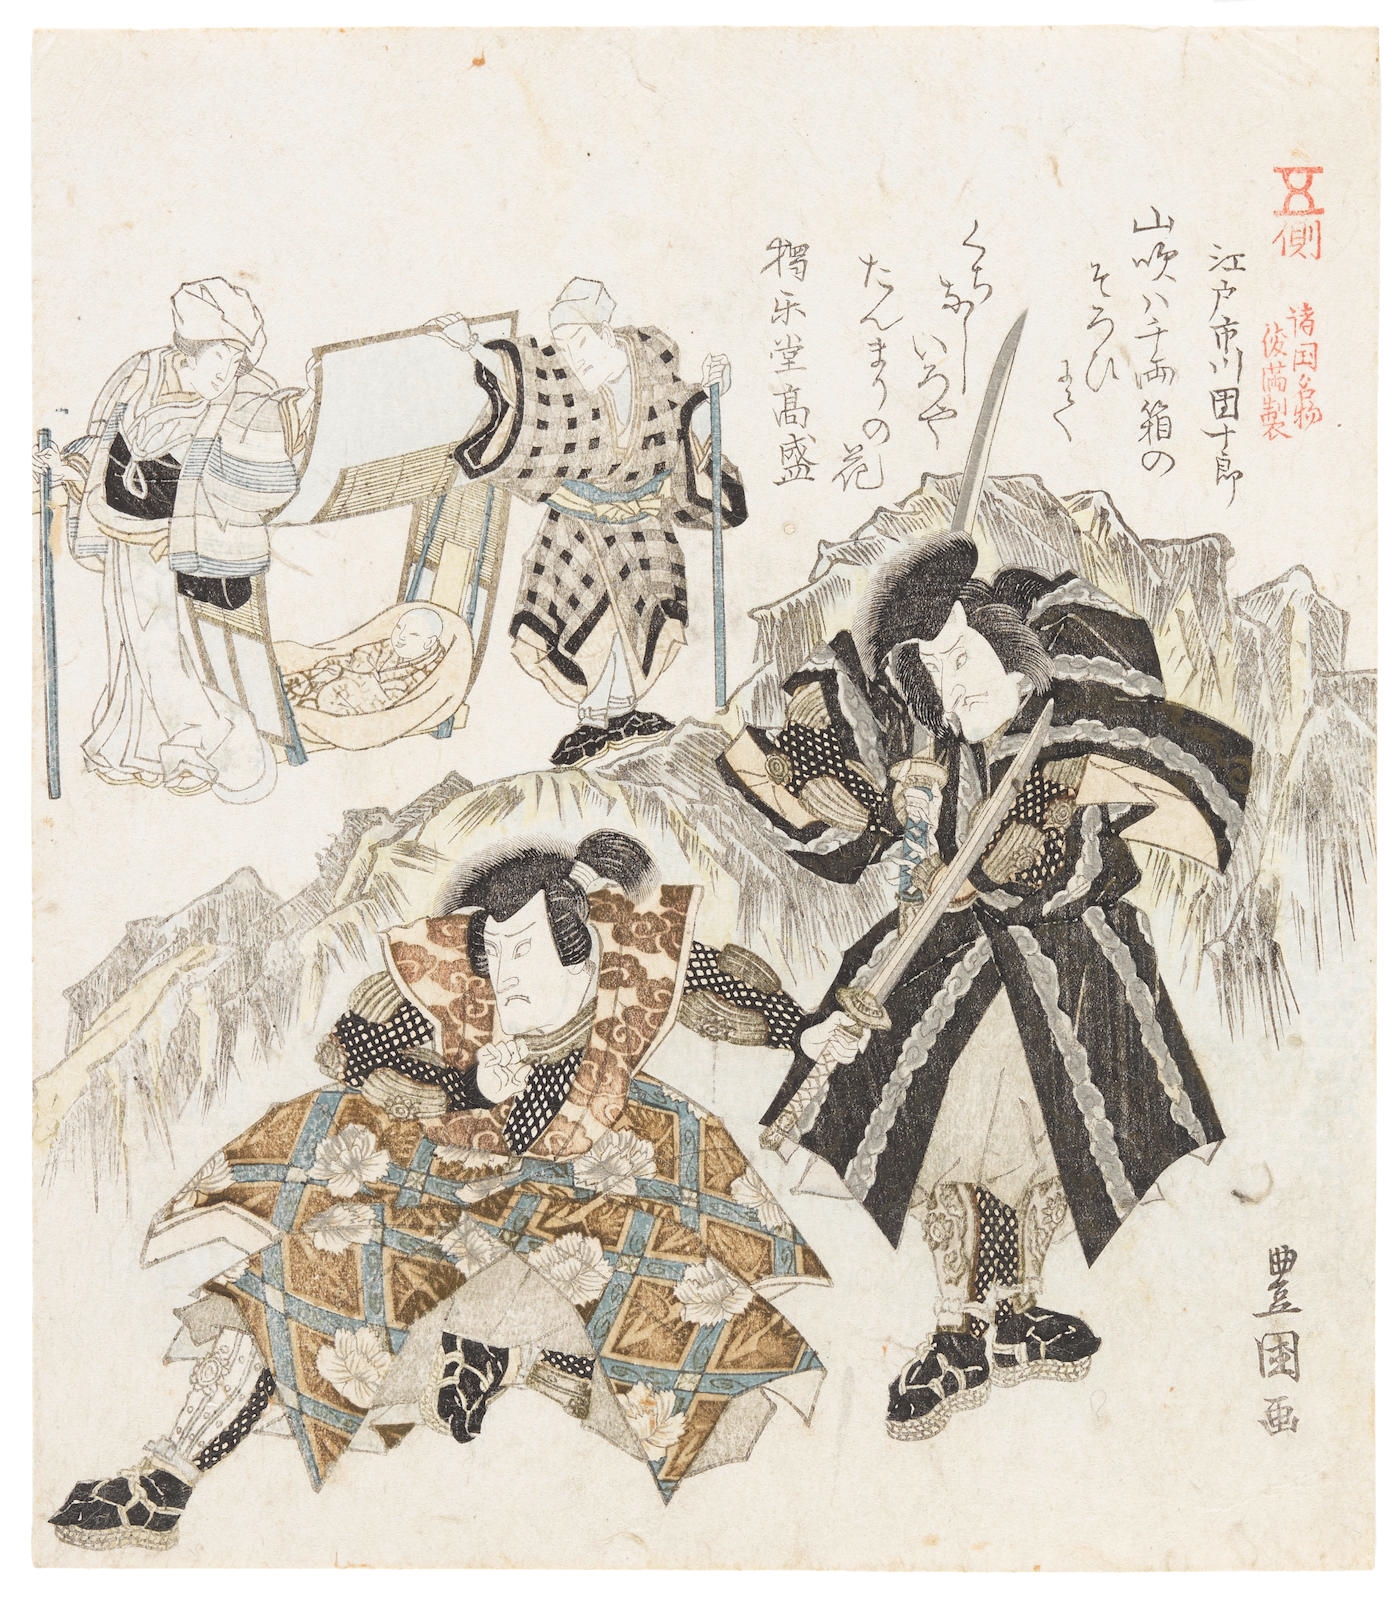 A surimono shikishi-ban print depicting Ichikawa Danjuro in Edo by Utagawa Toyokuni, circa 1820